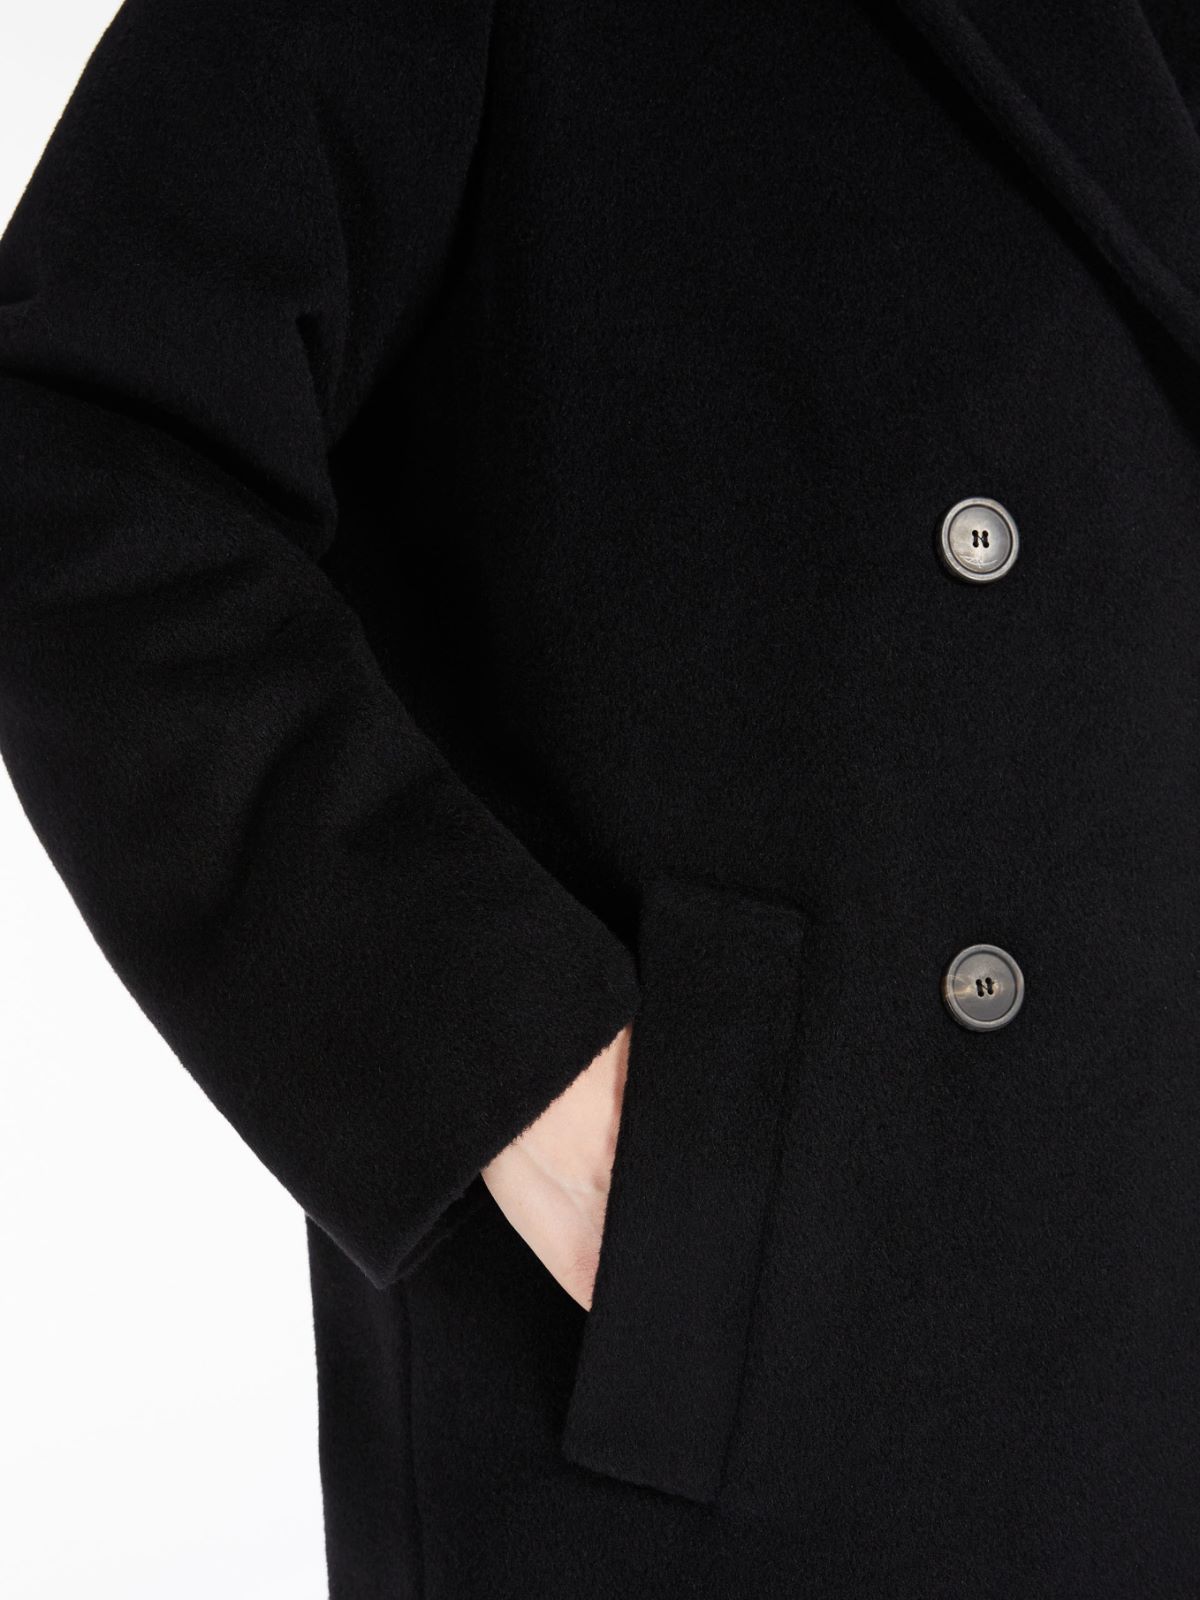 Double-breasted coat in wool and alpaca, black | Weekend Max Mara